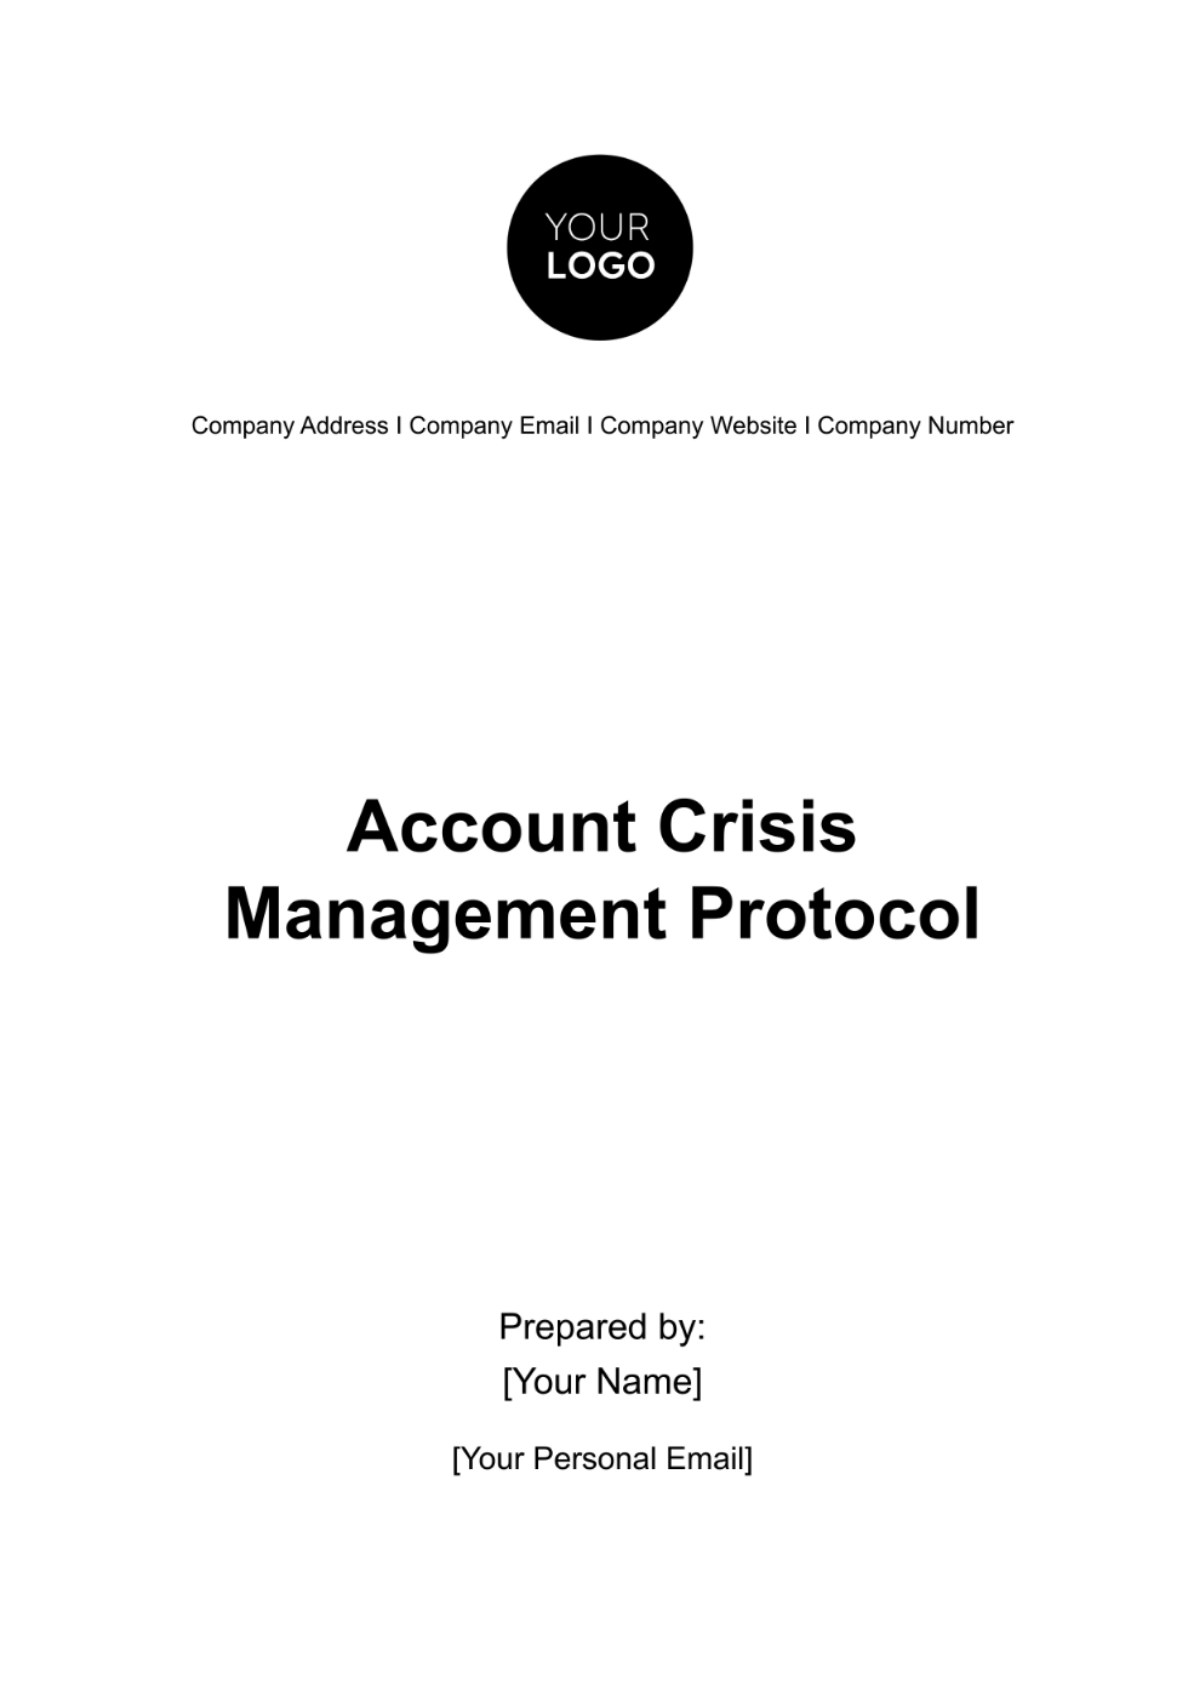 Account Crisis Management Protocol Template